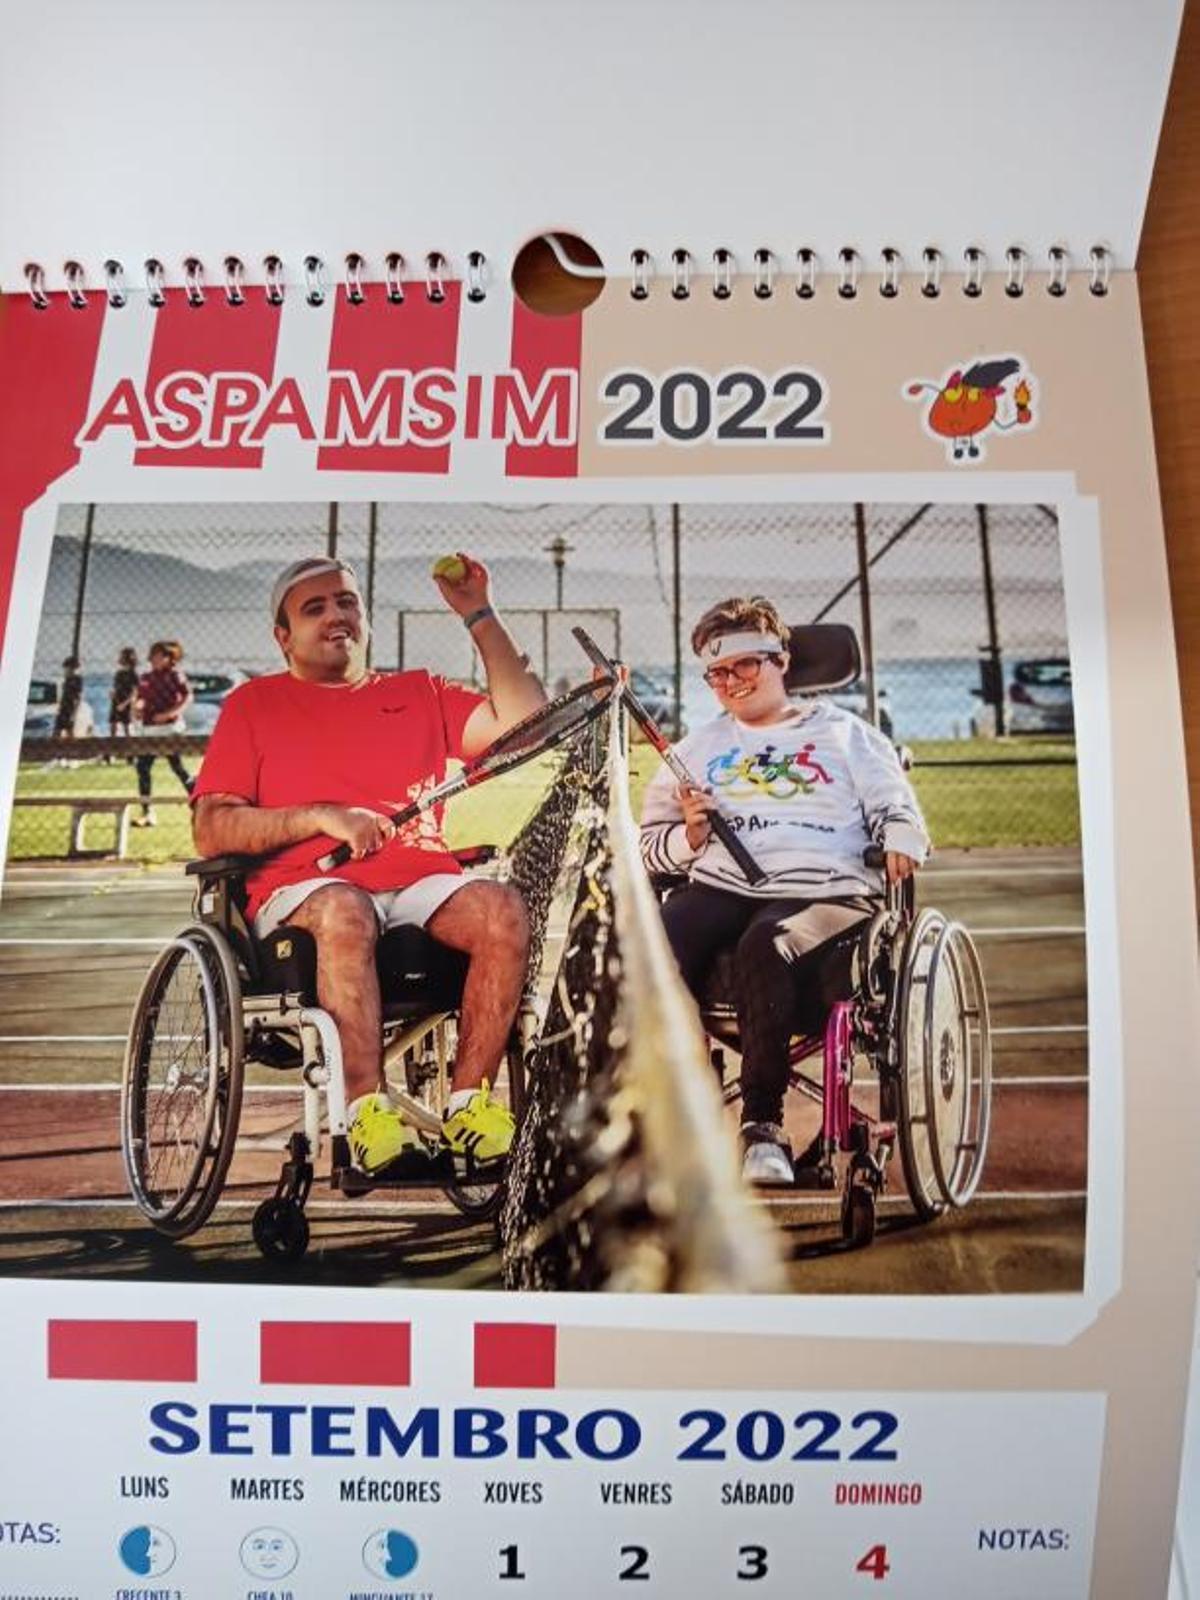 Calendario olímpico de Aspamsim